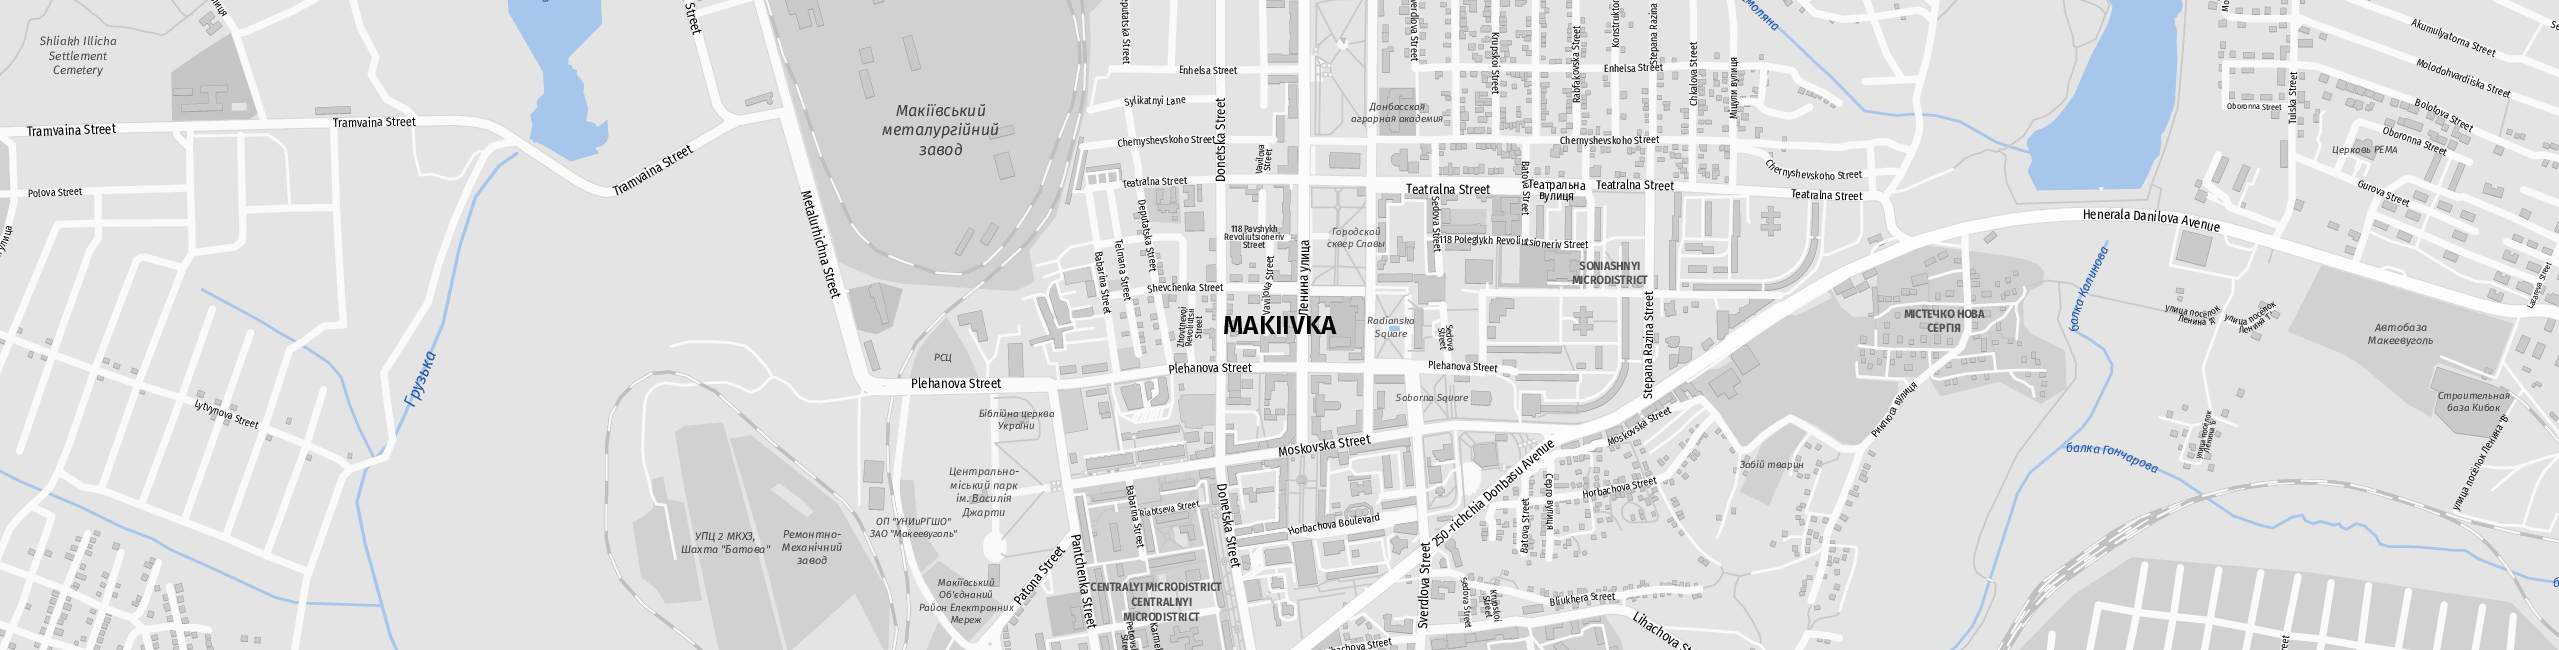 Stadtplan Makiivka zum Downloaden.